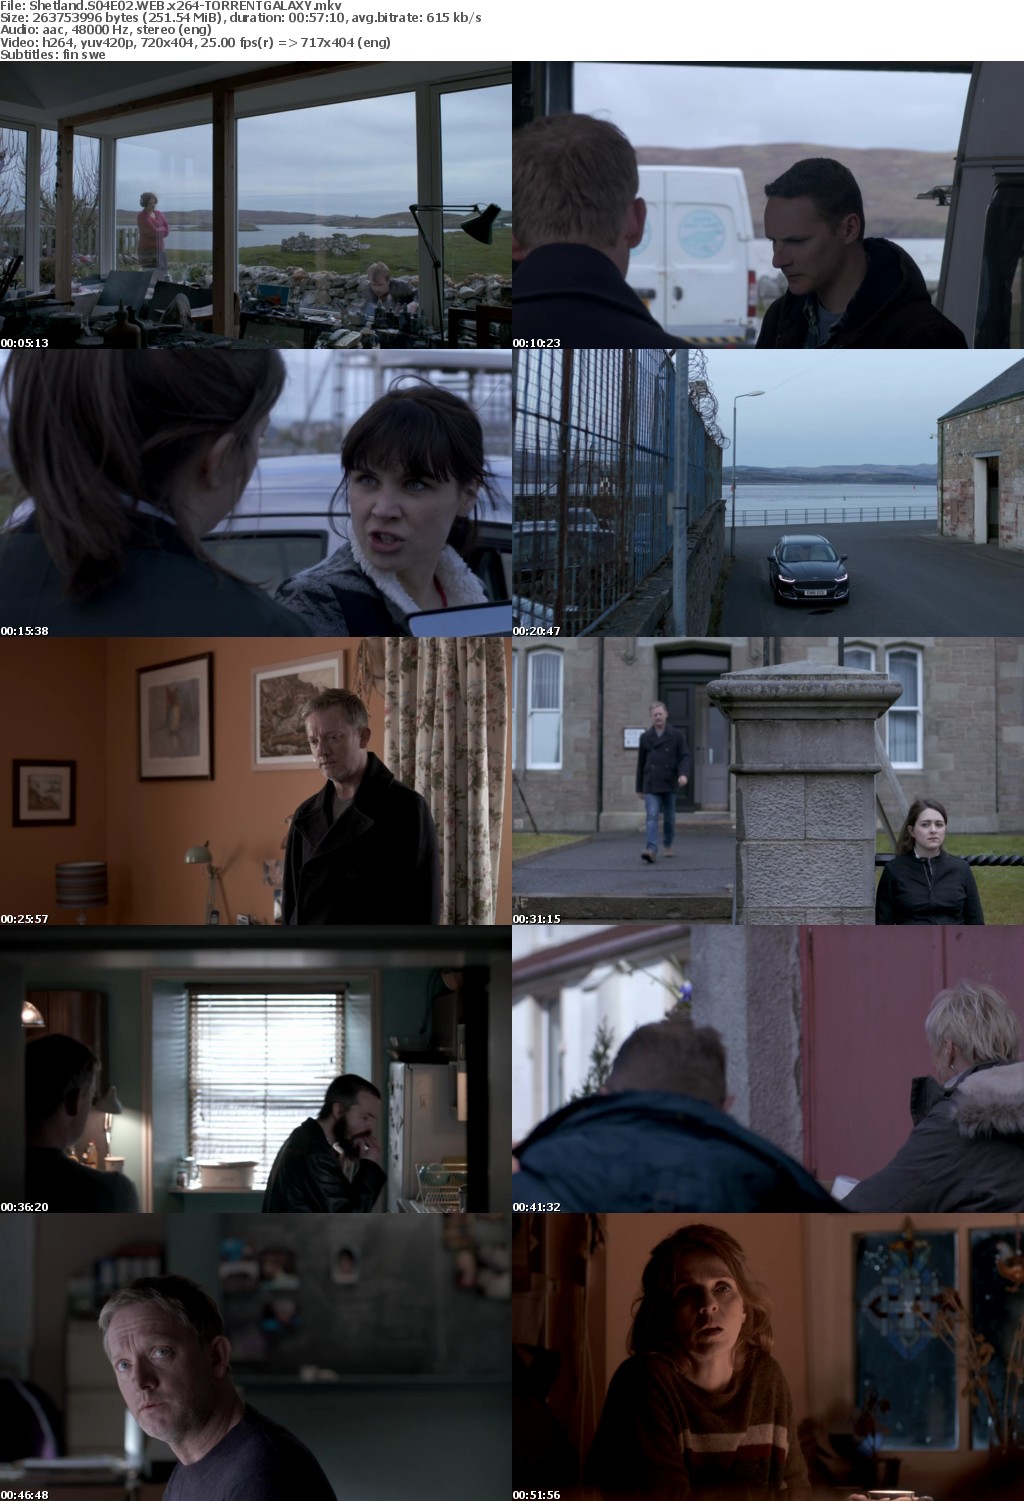 Shetland S04E02 WEB x264-GALAXY